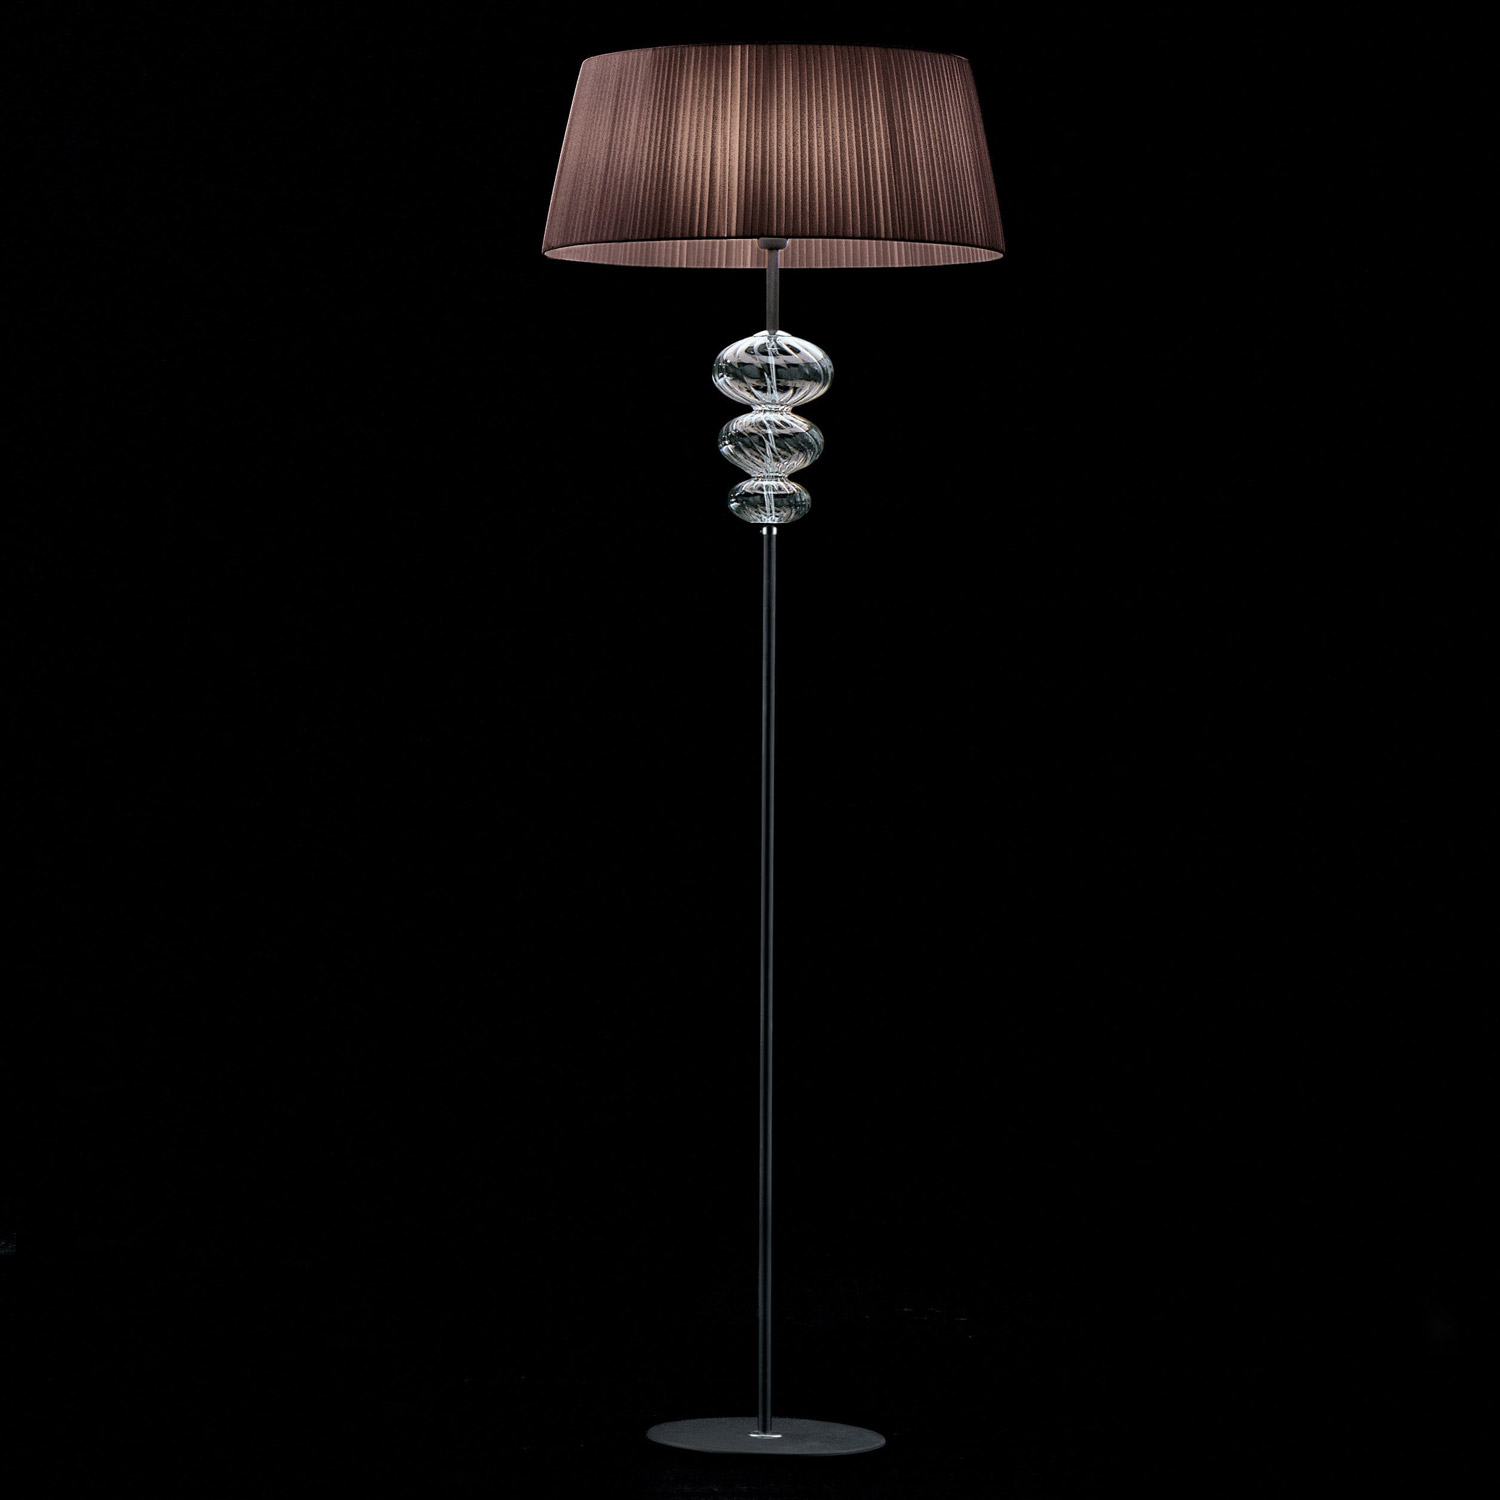 Musa TR floor lamp by Vintage